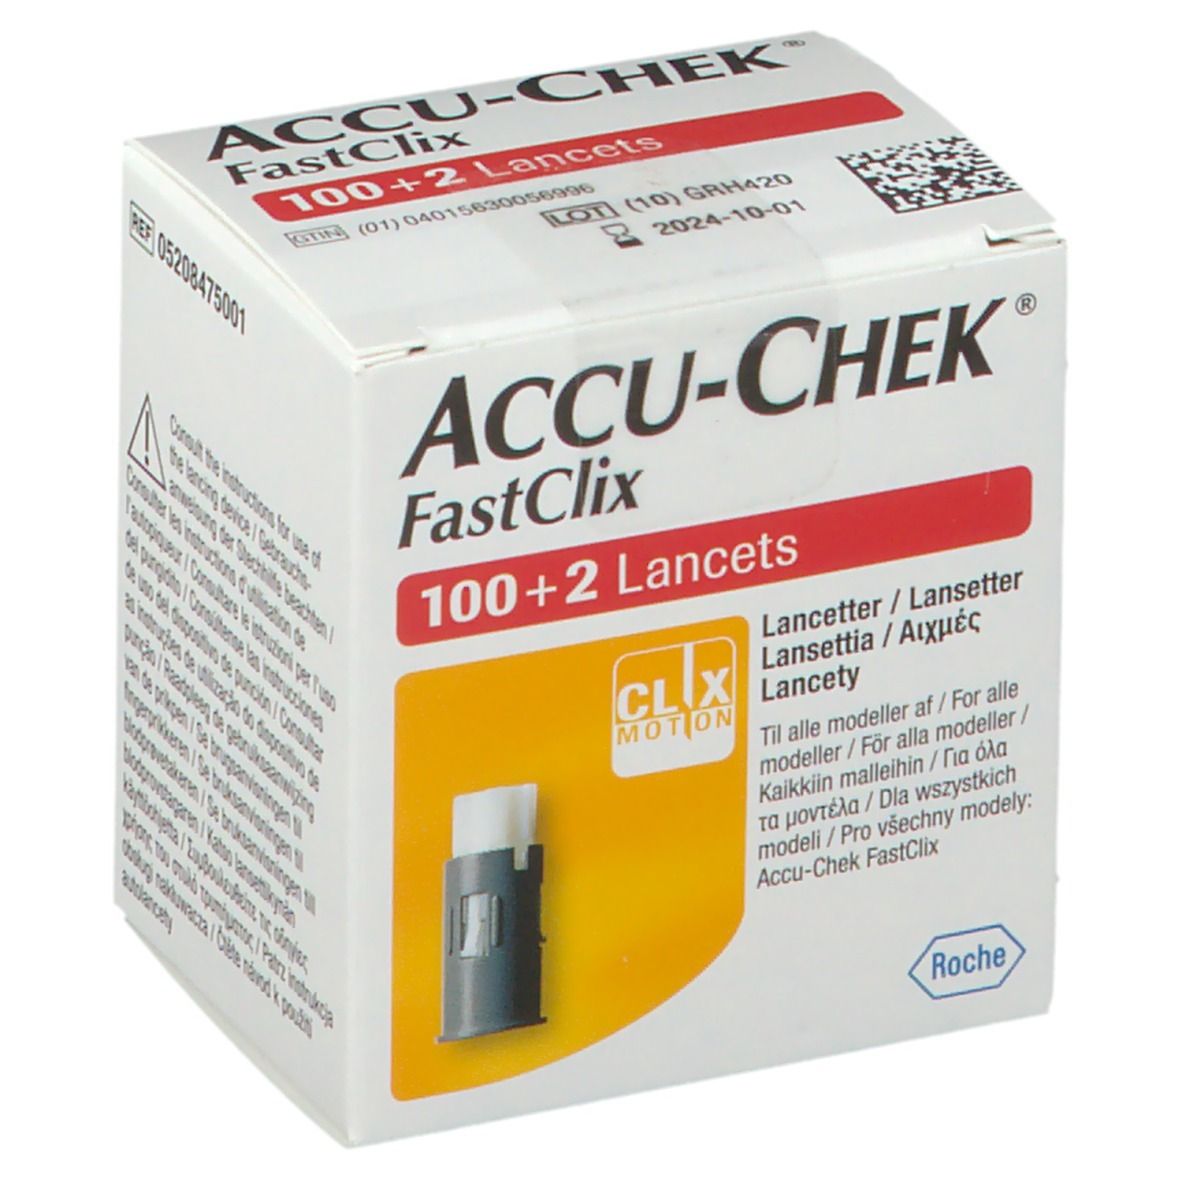 ACCU-CHEK® FastClix Lanzetten